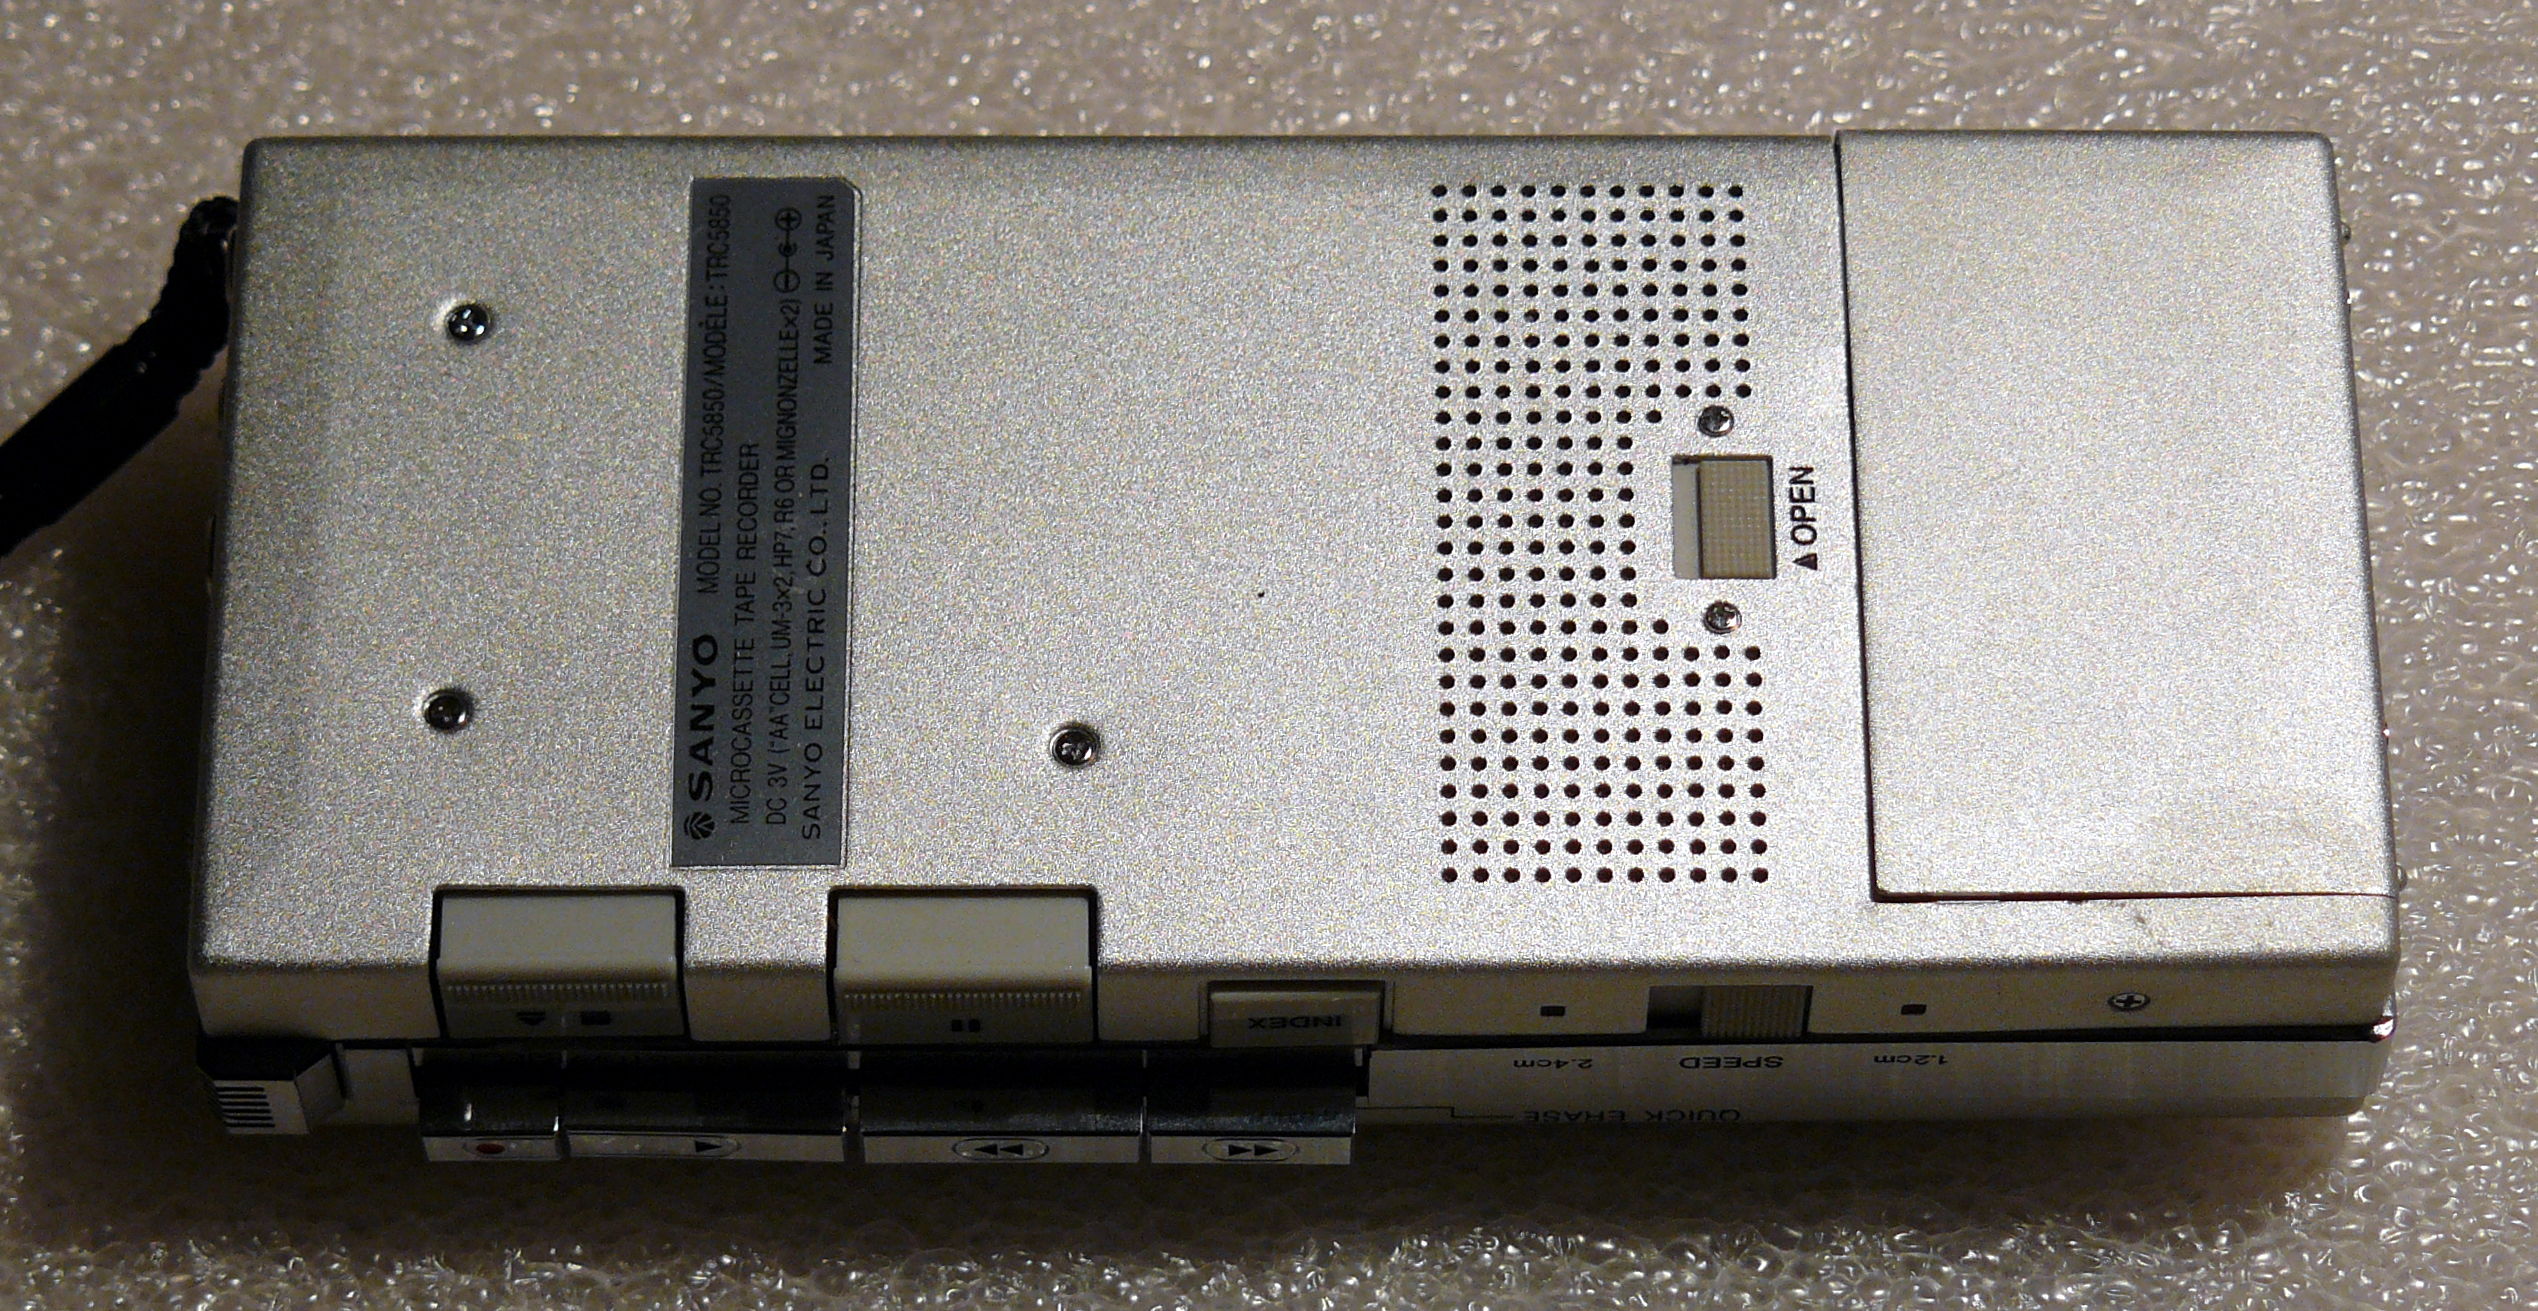 Sanyo TRC 5850 Dictaphone, arrière